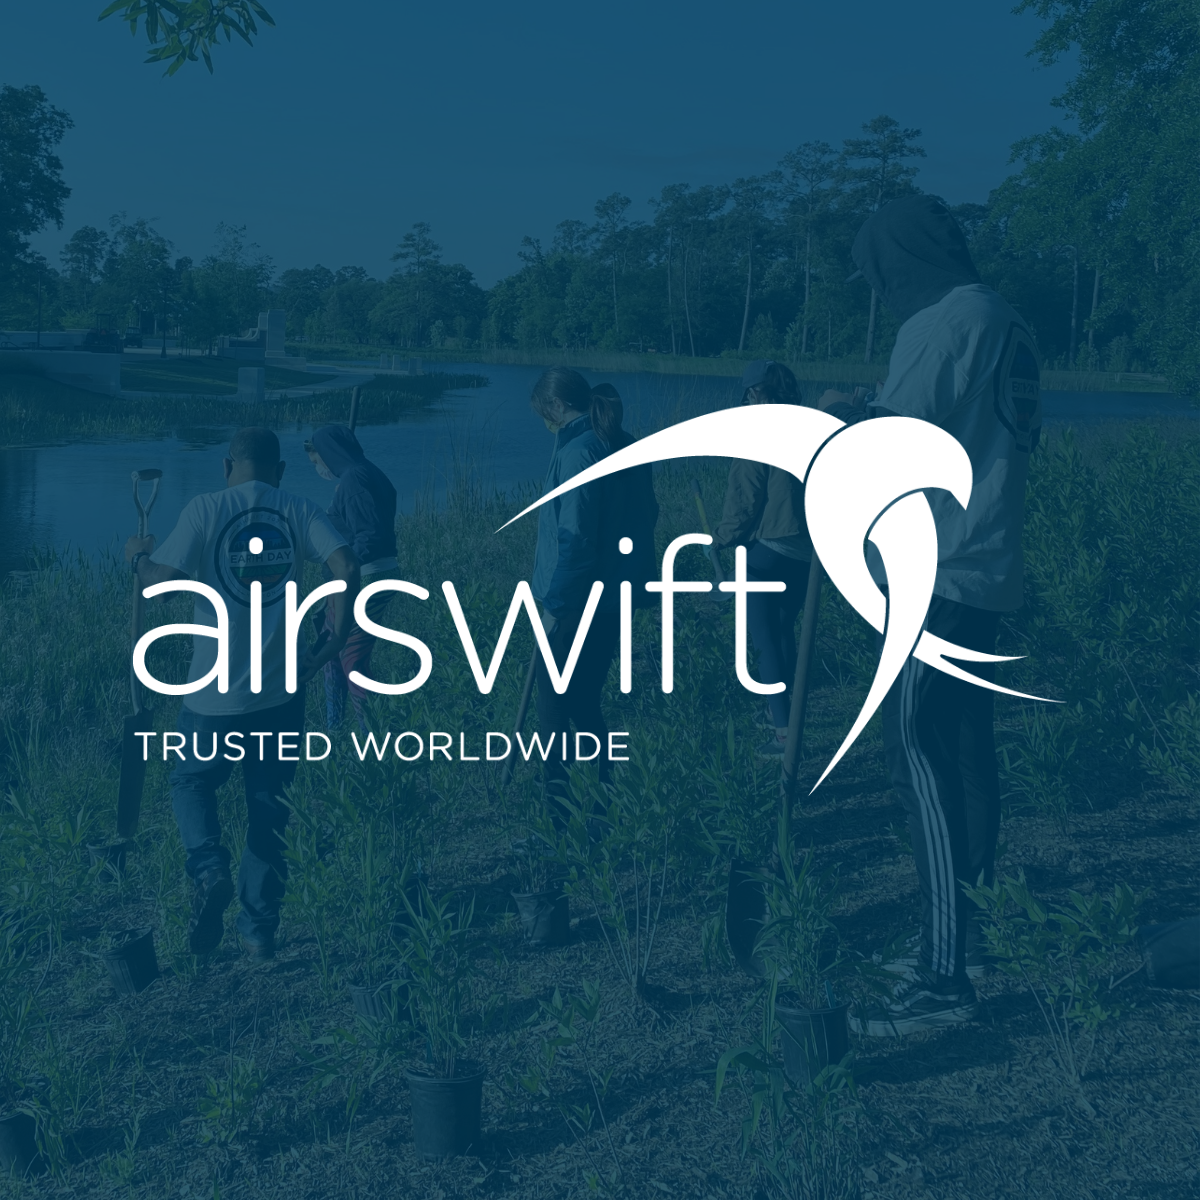 Airswift logo